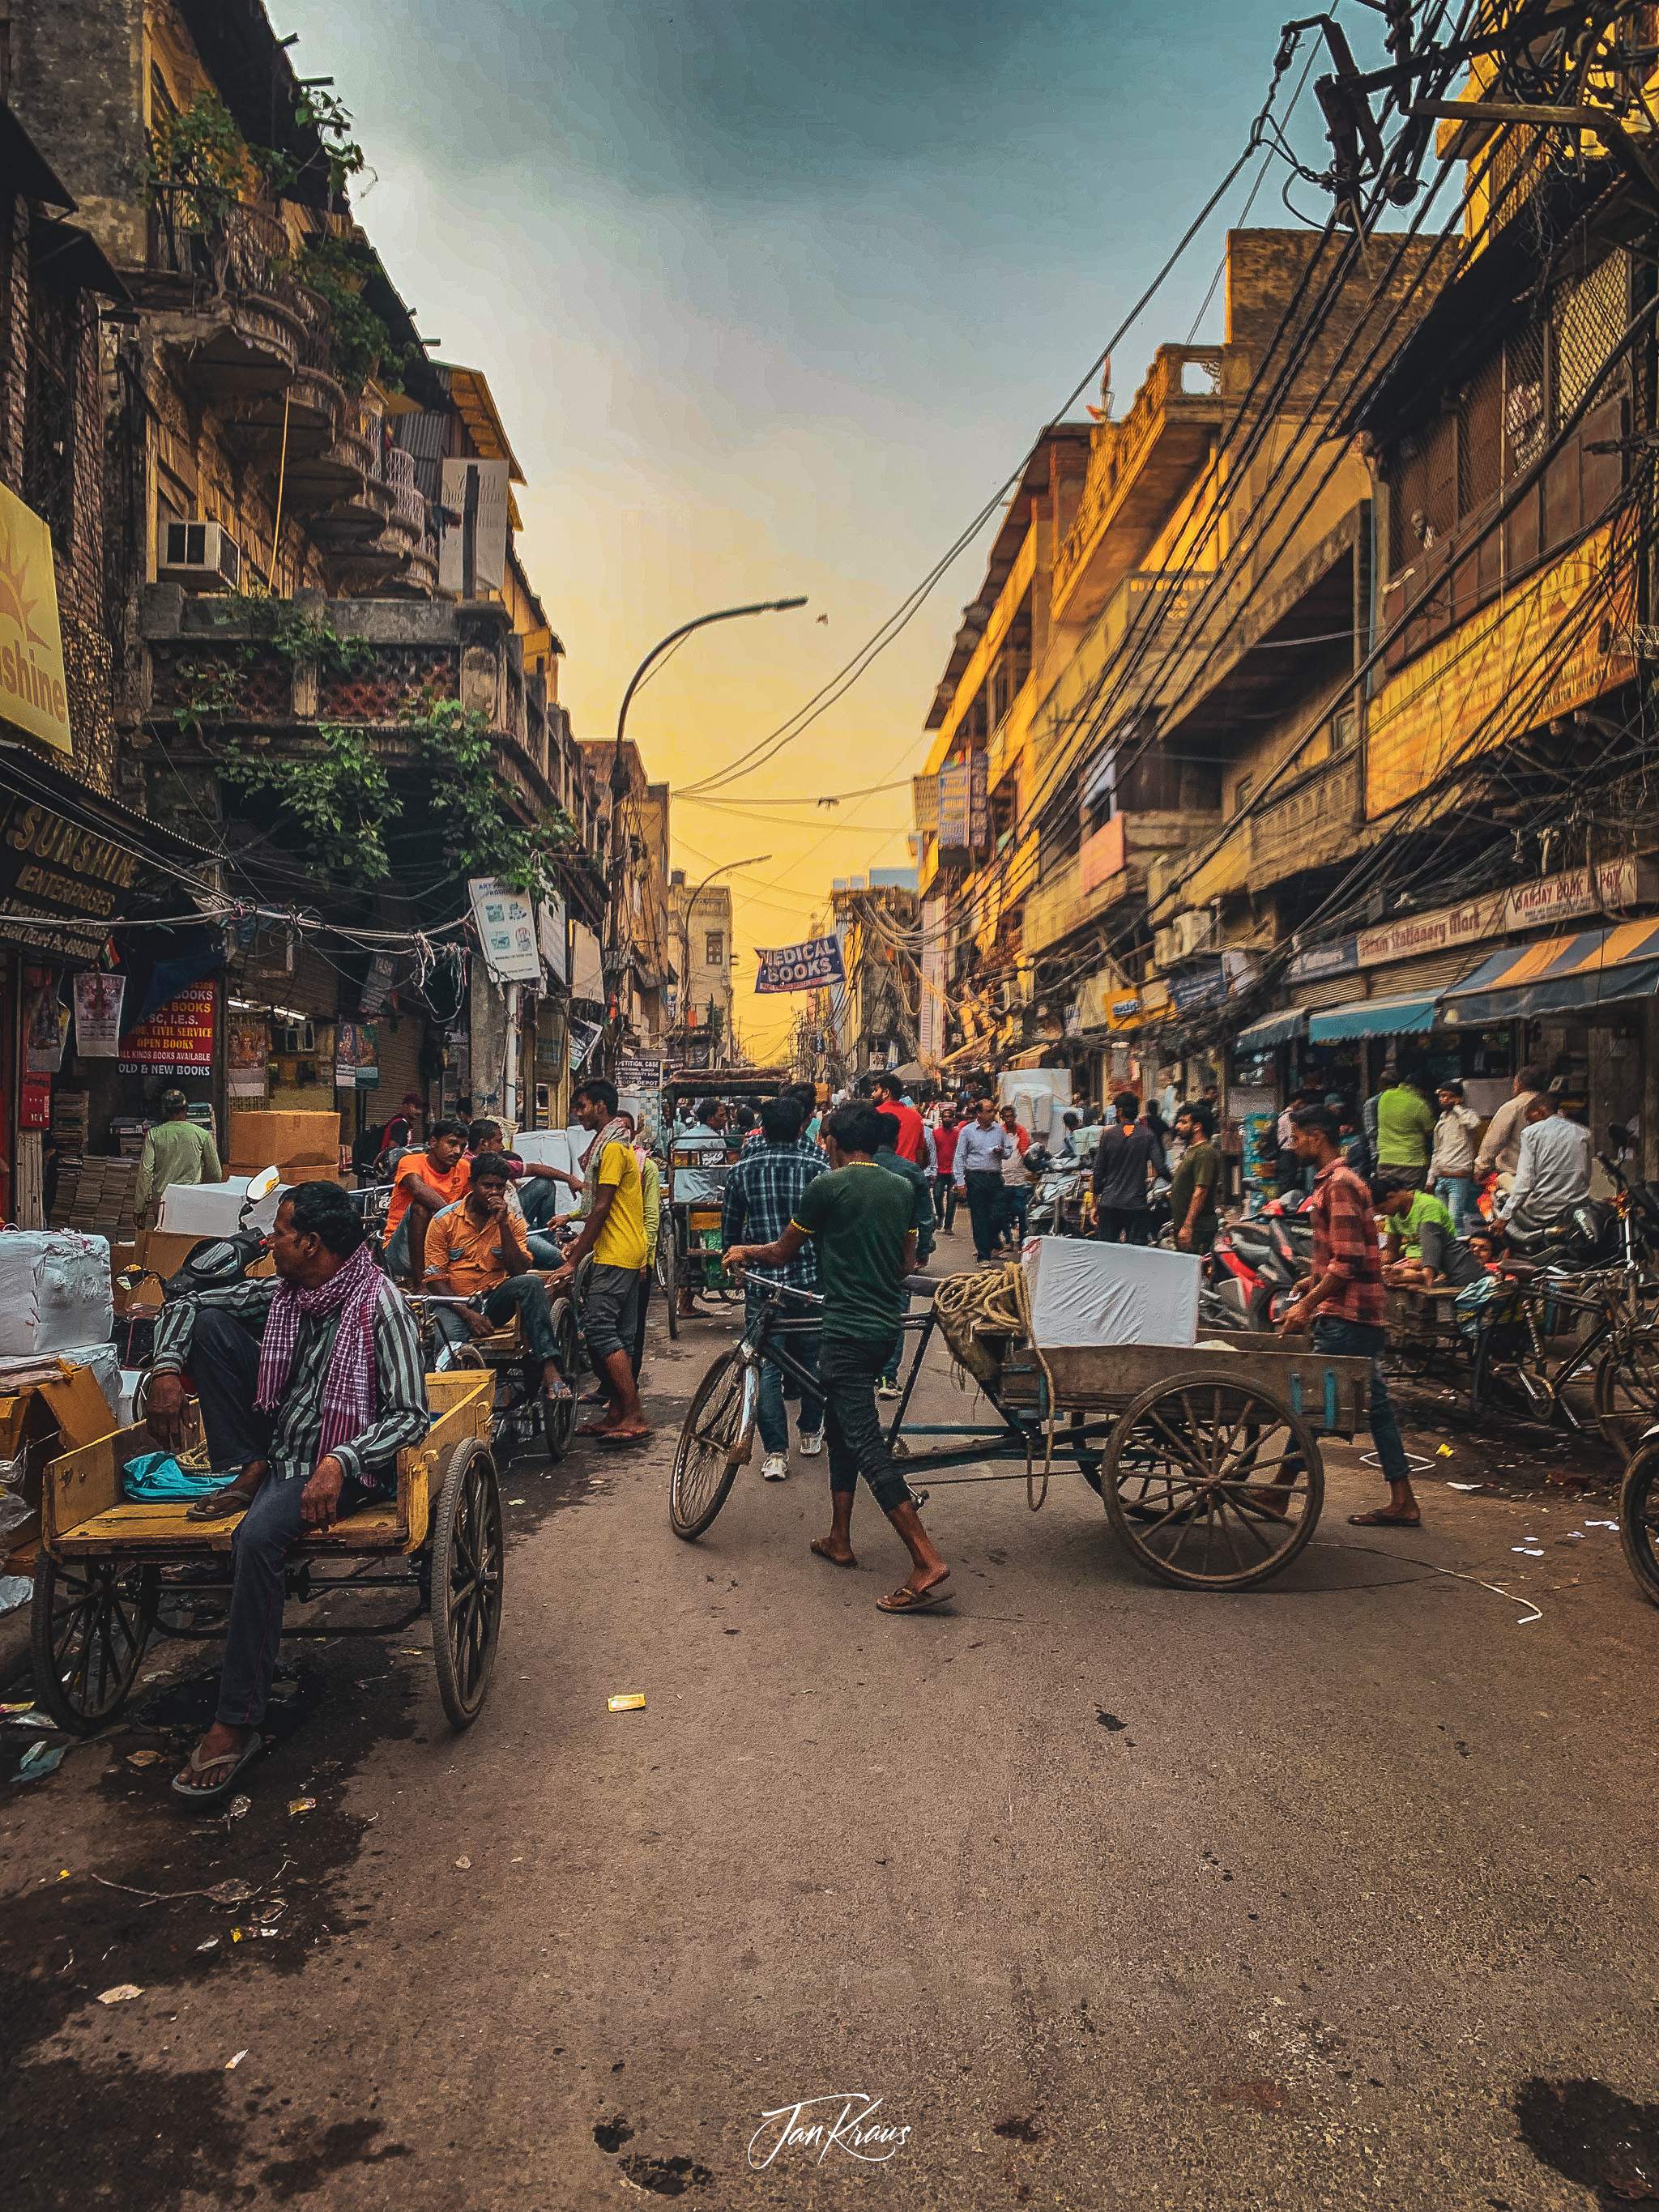 Busy market streets of Chandni Chowk, Delhi, India